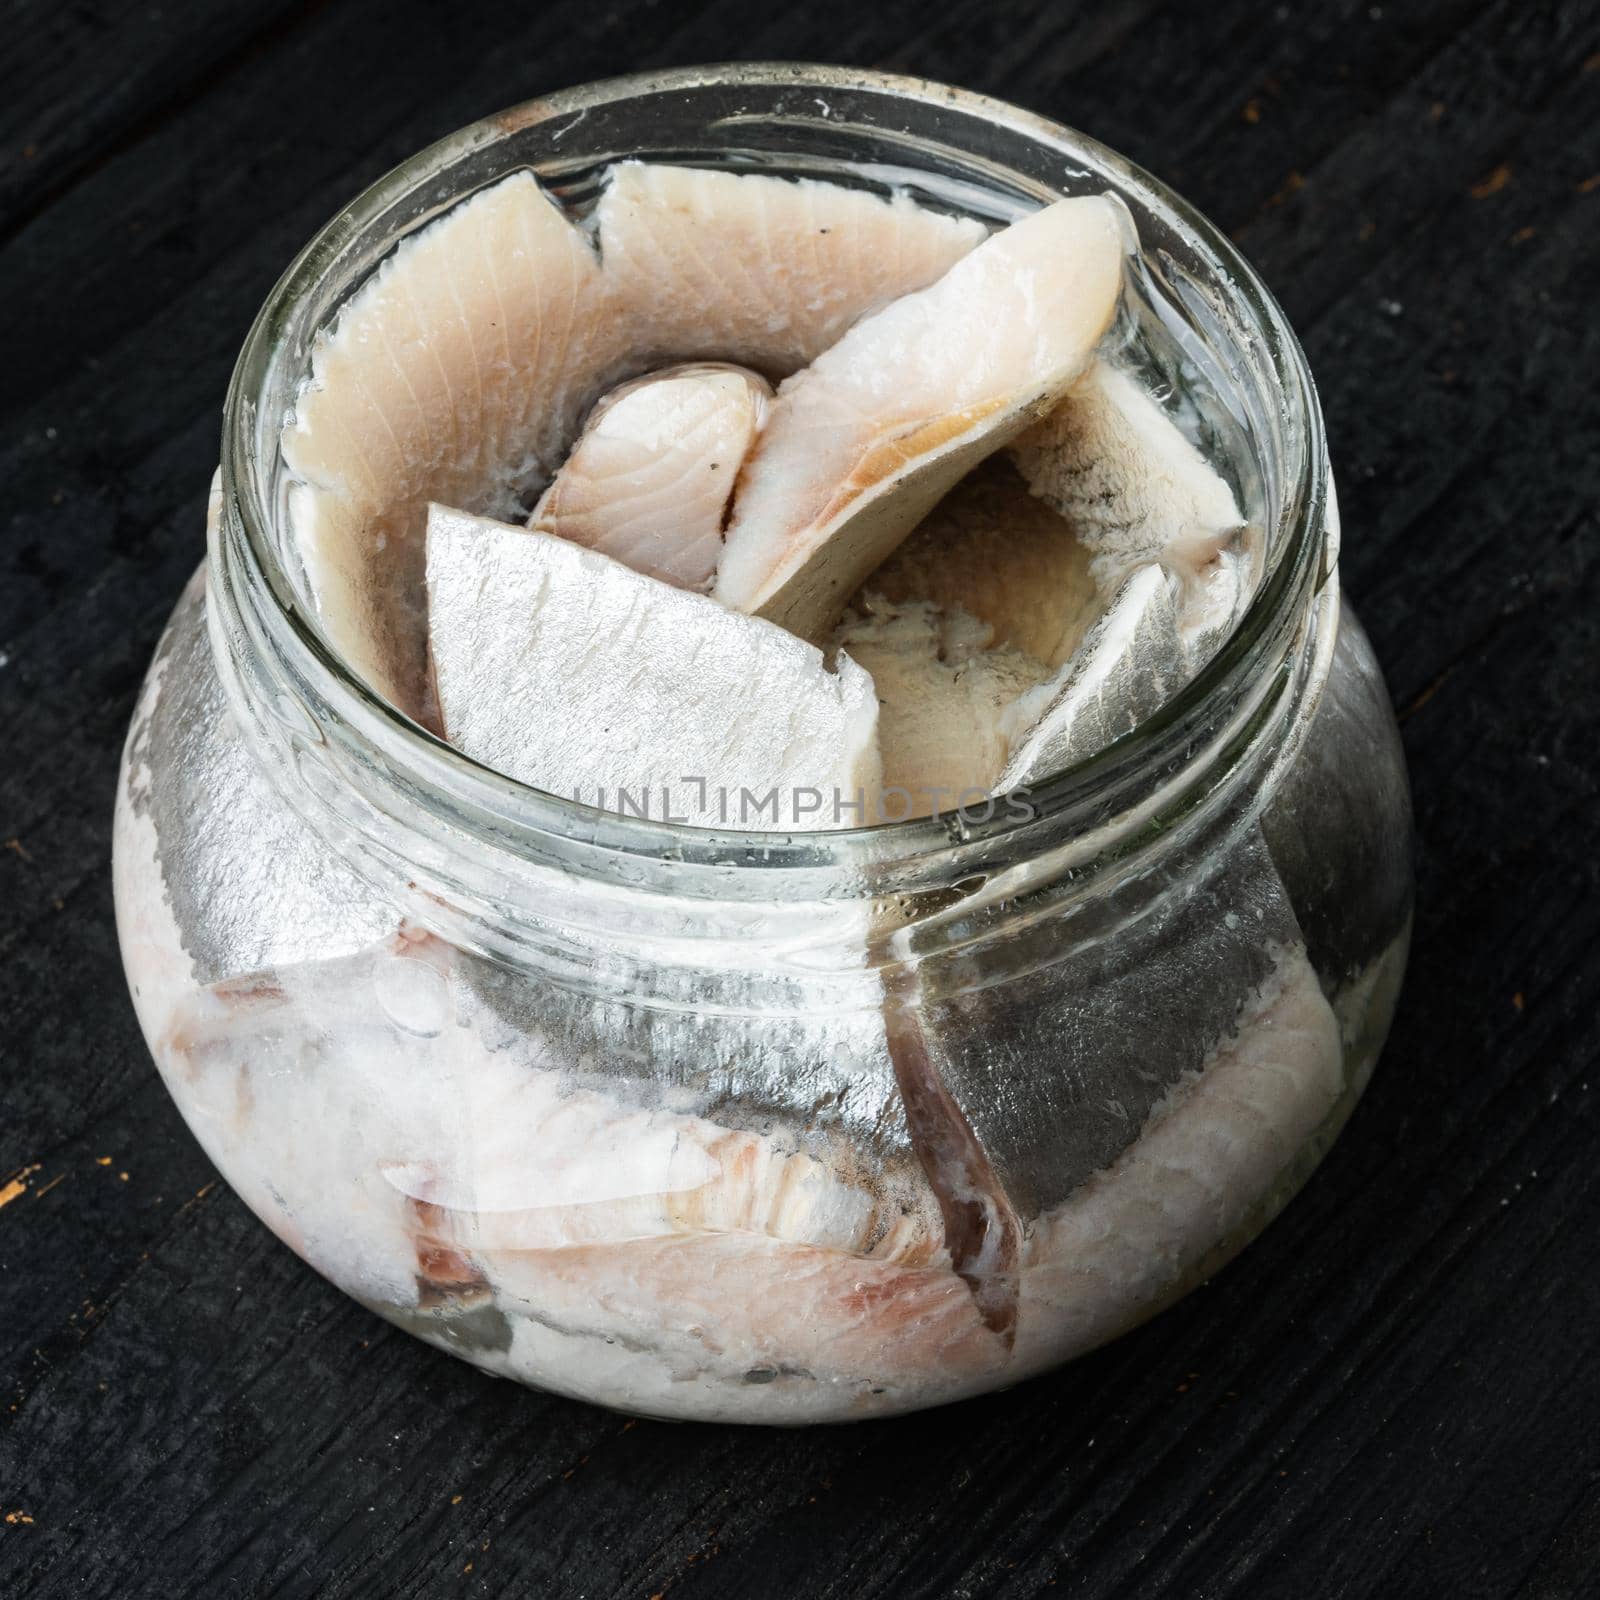 Pickled herring set, in glass jar, on black wooden table background, square format